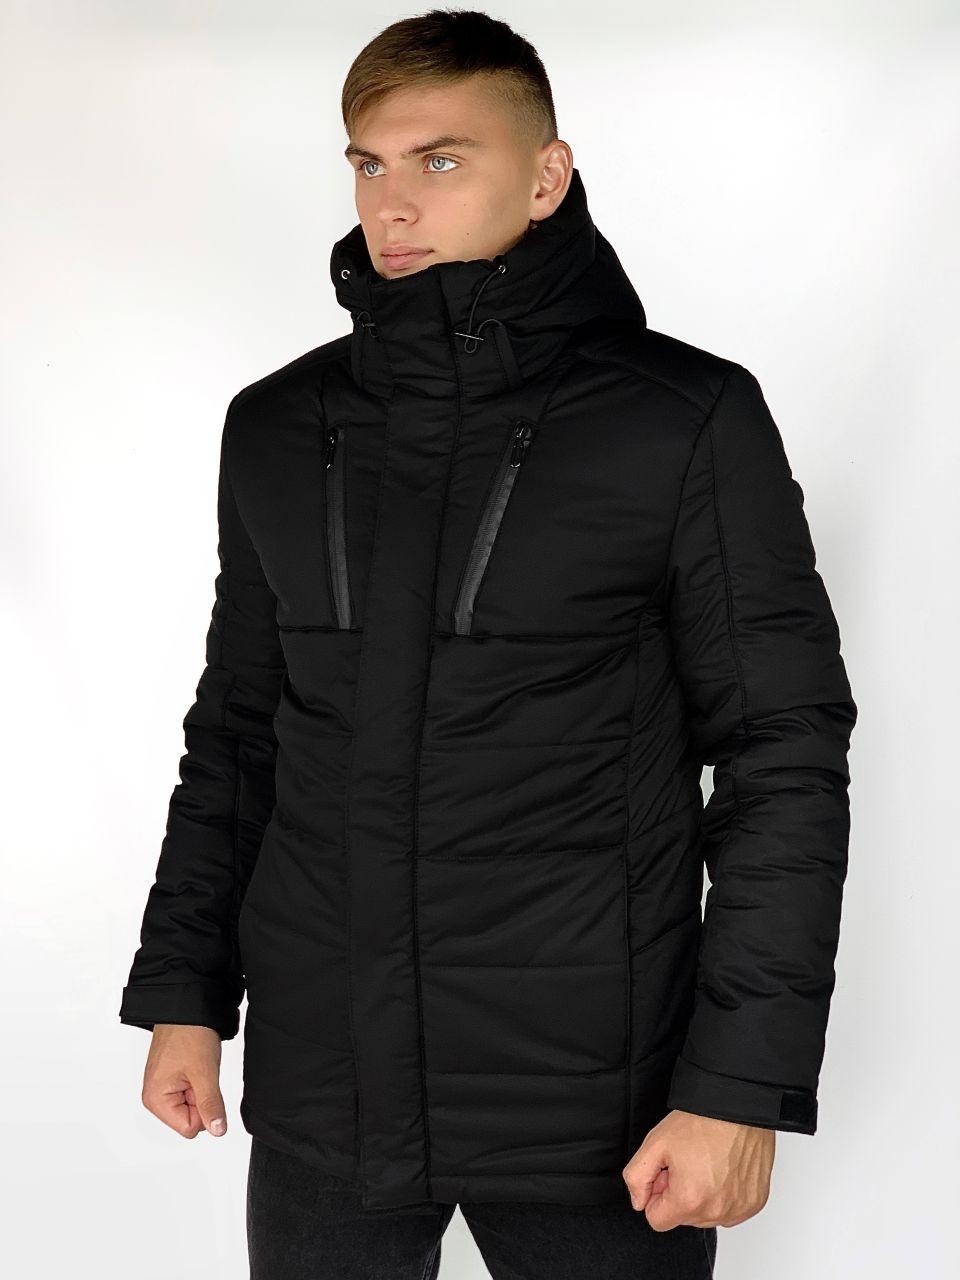 Куртка чоловіча зимова Intruder Everest чорна